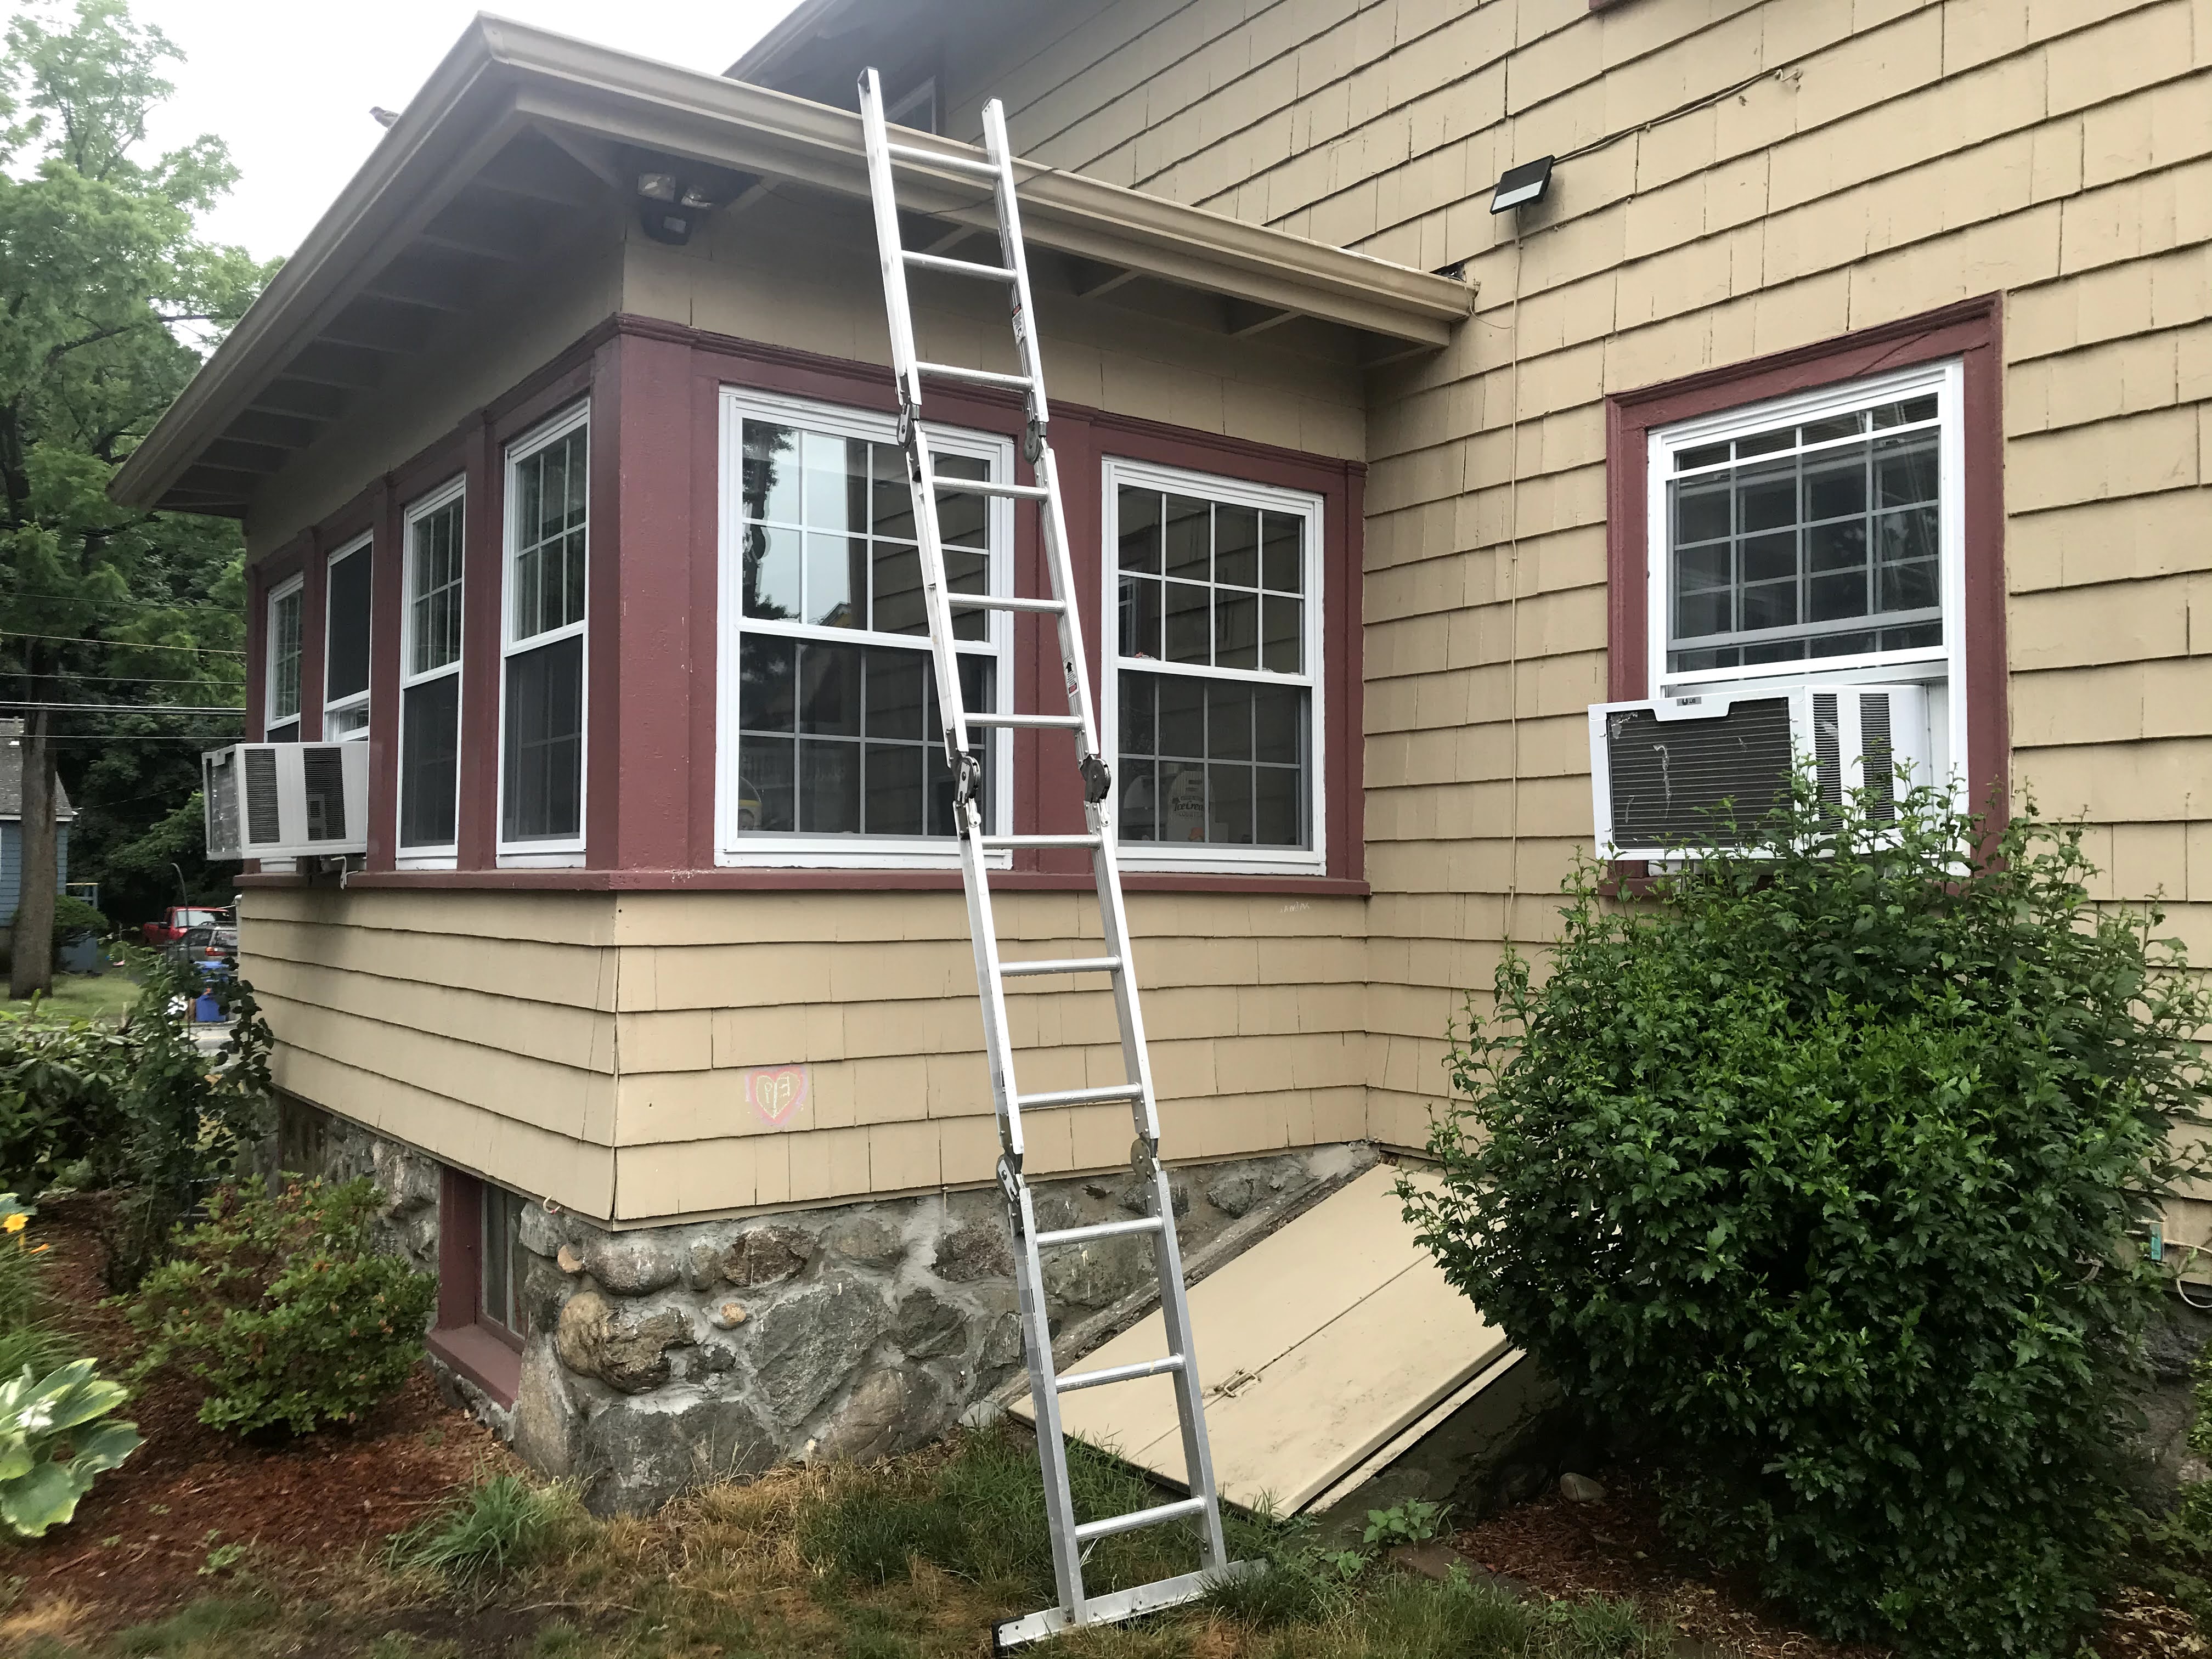 Store ladders to help prevent burglars and break-ins #safetyprevention #homethefts